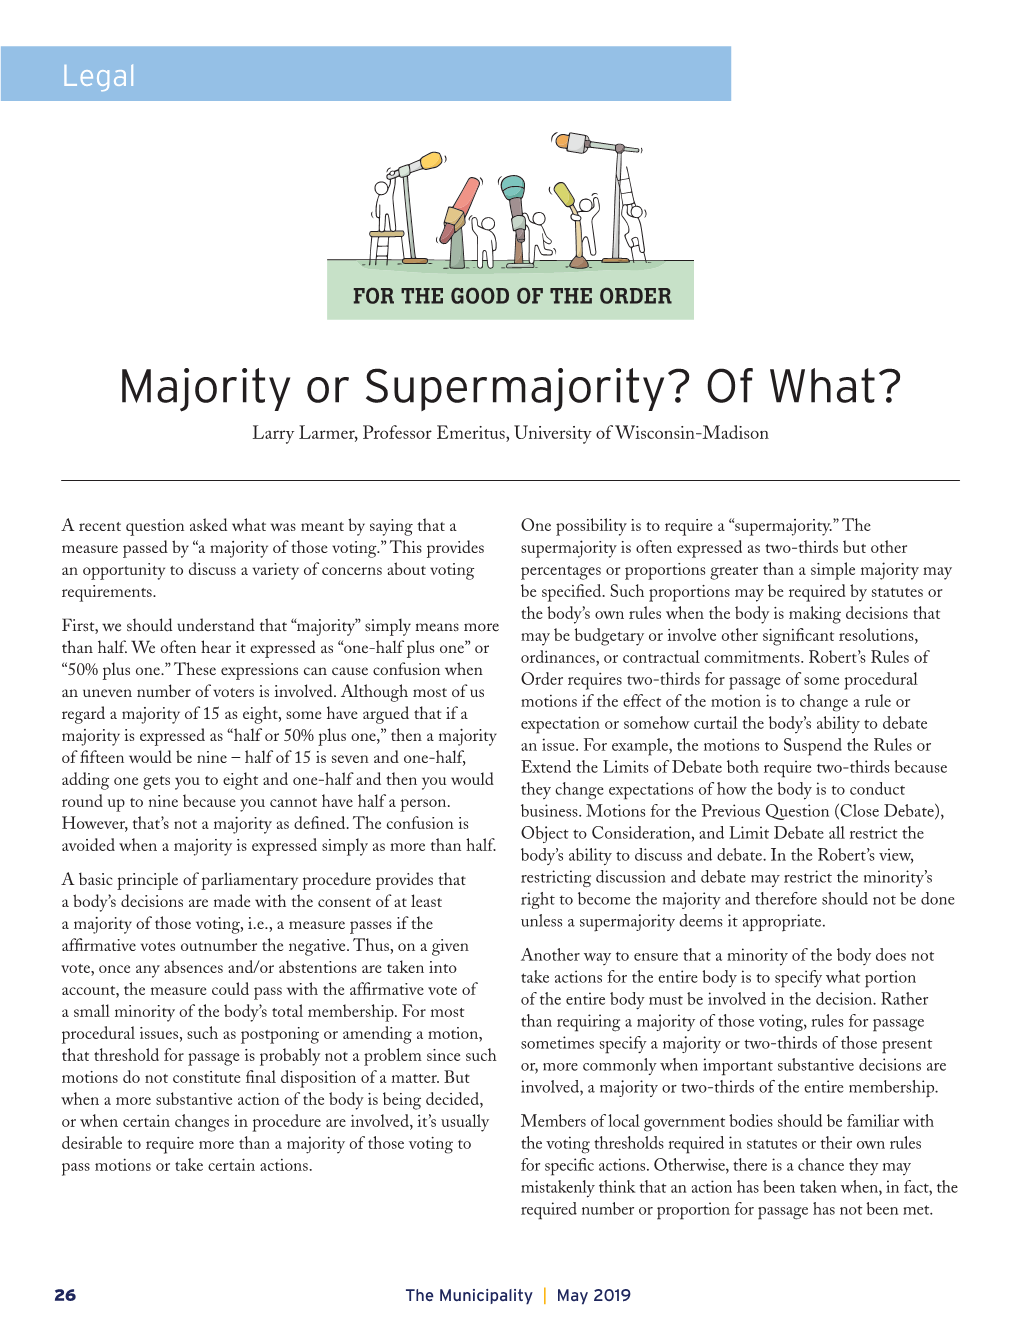 Majority Or Supermajority? of What? Larry Larmer, Professor Emeritus, University of Wisconsin-Madison